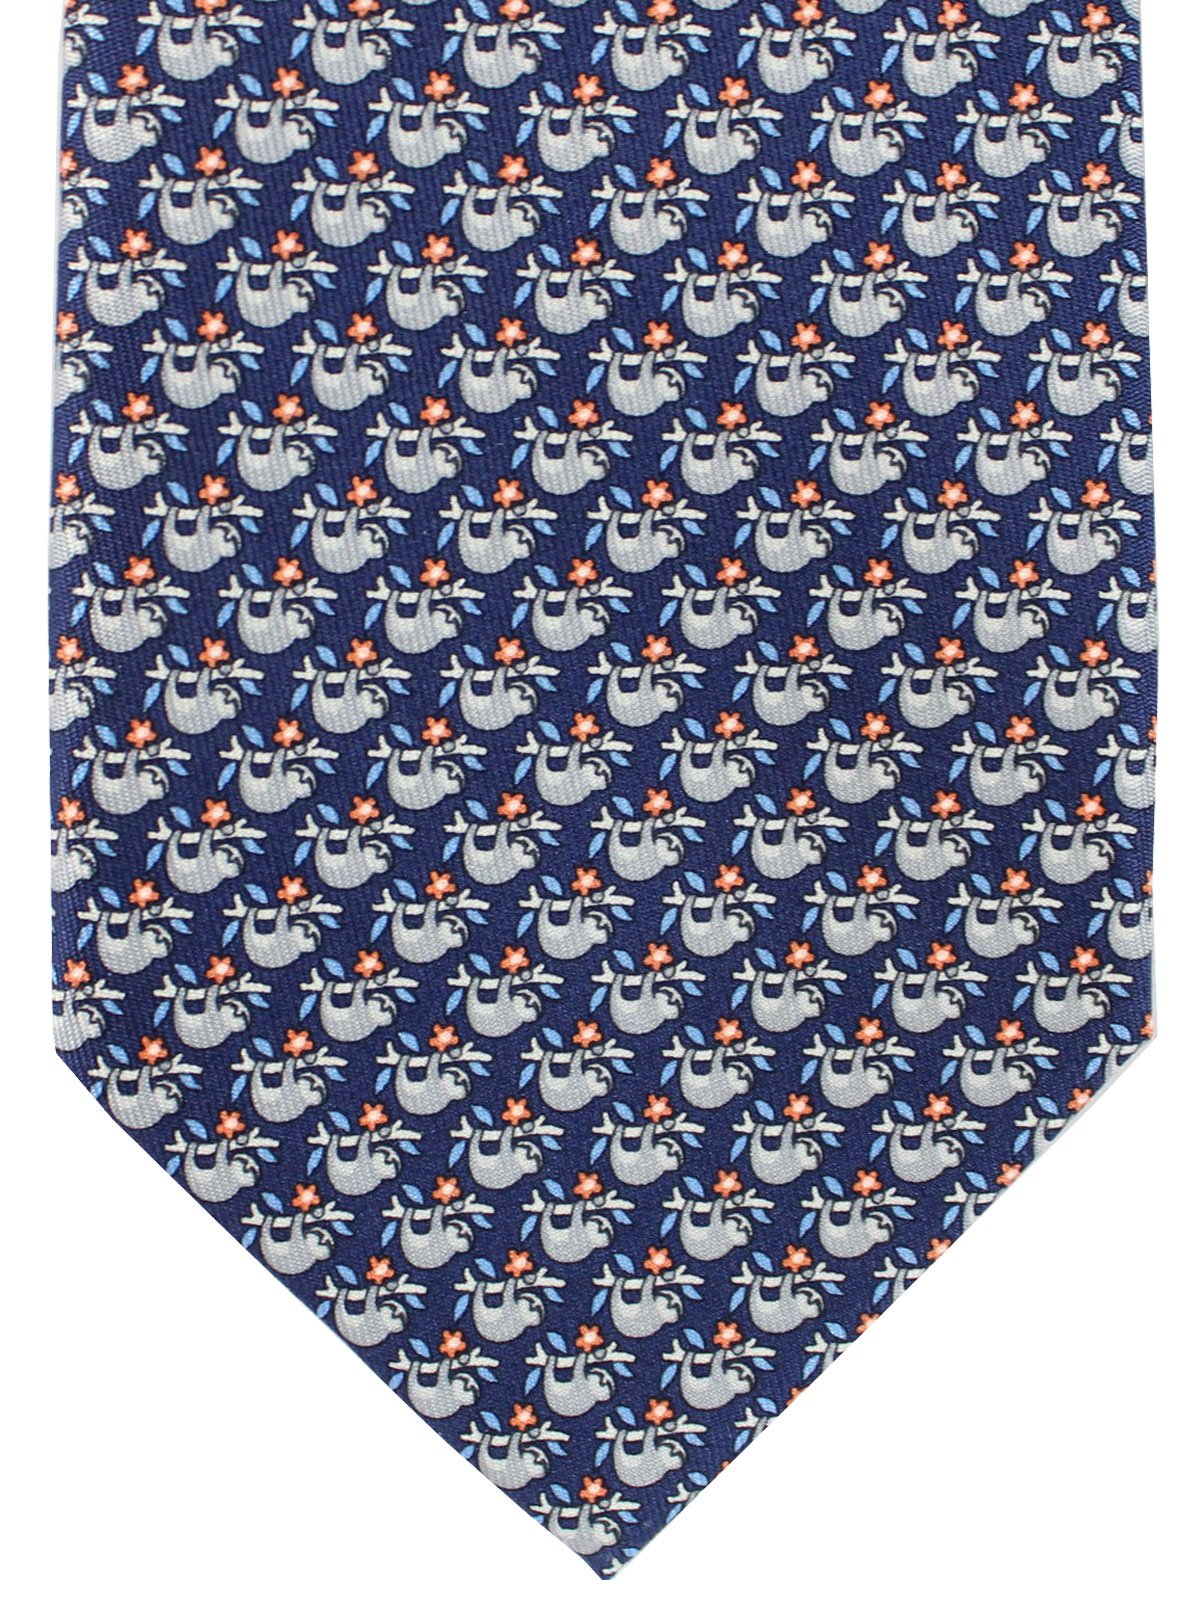 Salvatore Ferragamo Tie Navy Panda Novelty